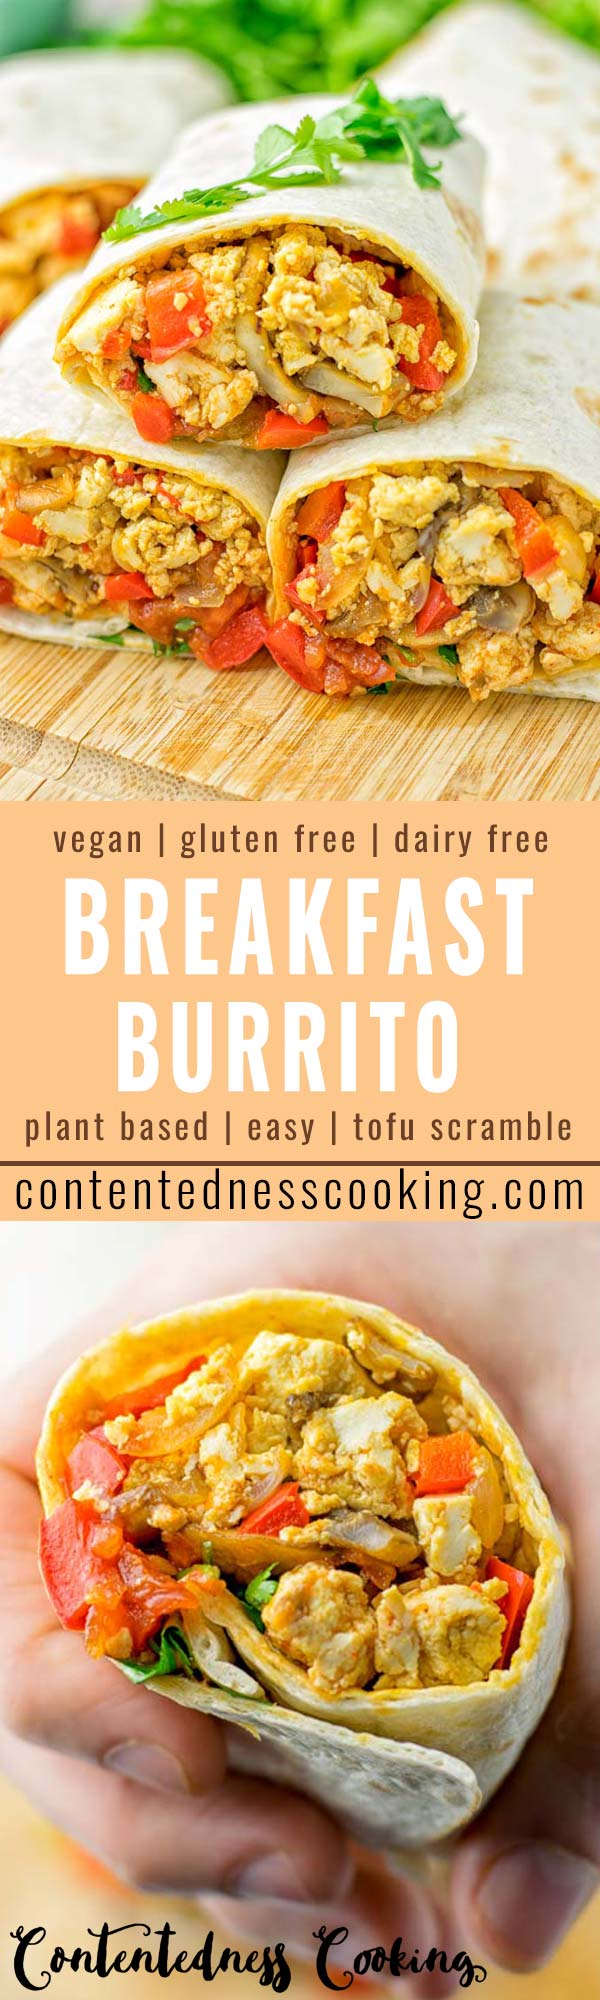 Vegan Breakfast Burrito With Tofu Scramble Contentedness Cooking,Thai Tea Cake Recipe